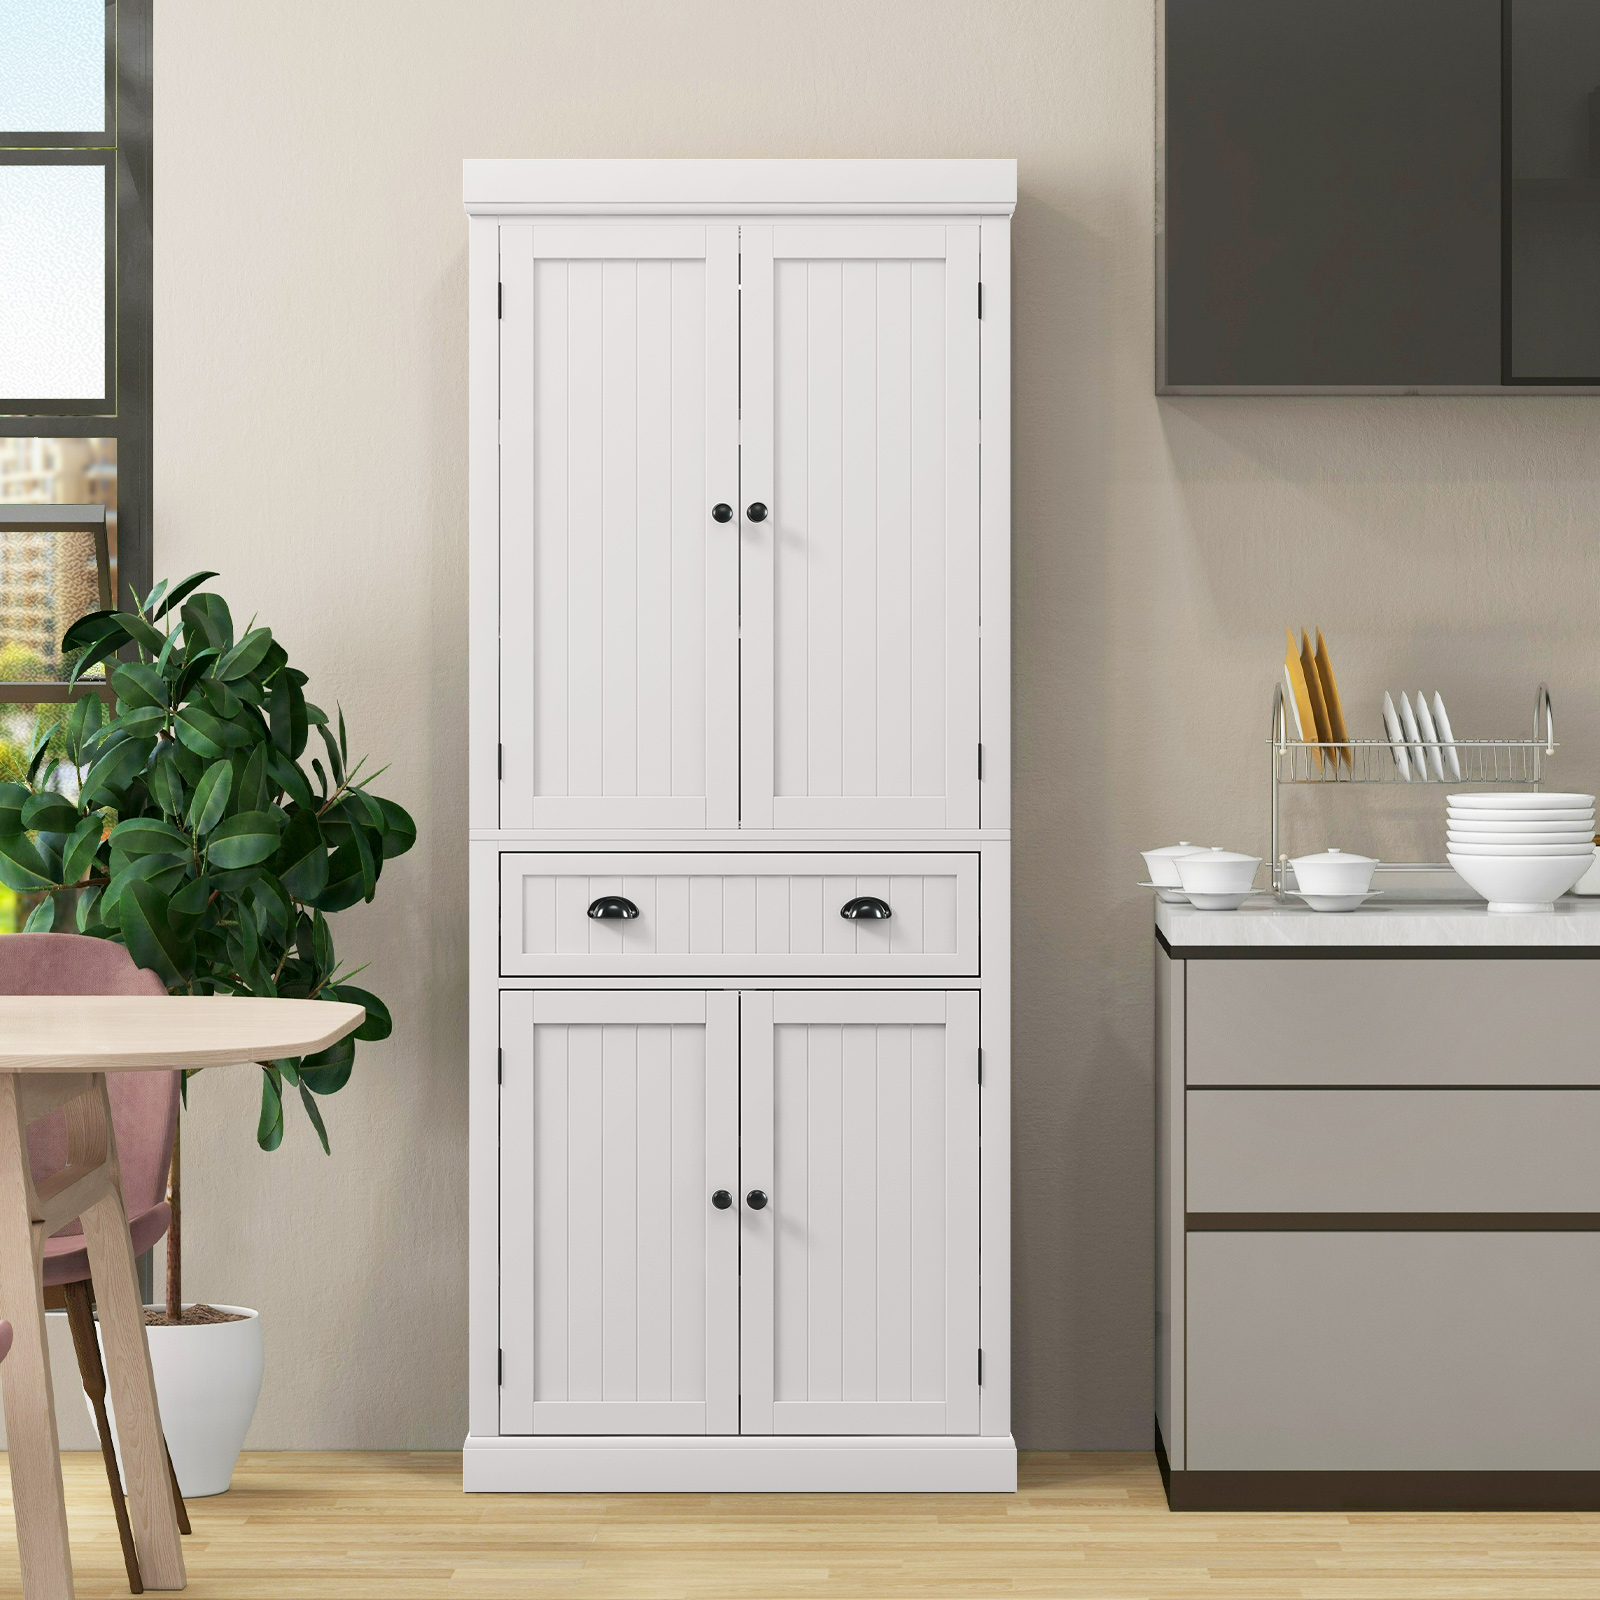 4_Door_Tall_Kitchen_Cupboard_Adjustable_Shelves_and_Drawer_White-1.jpg